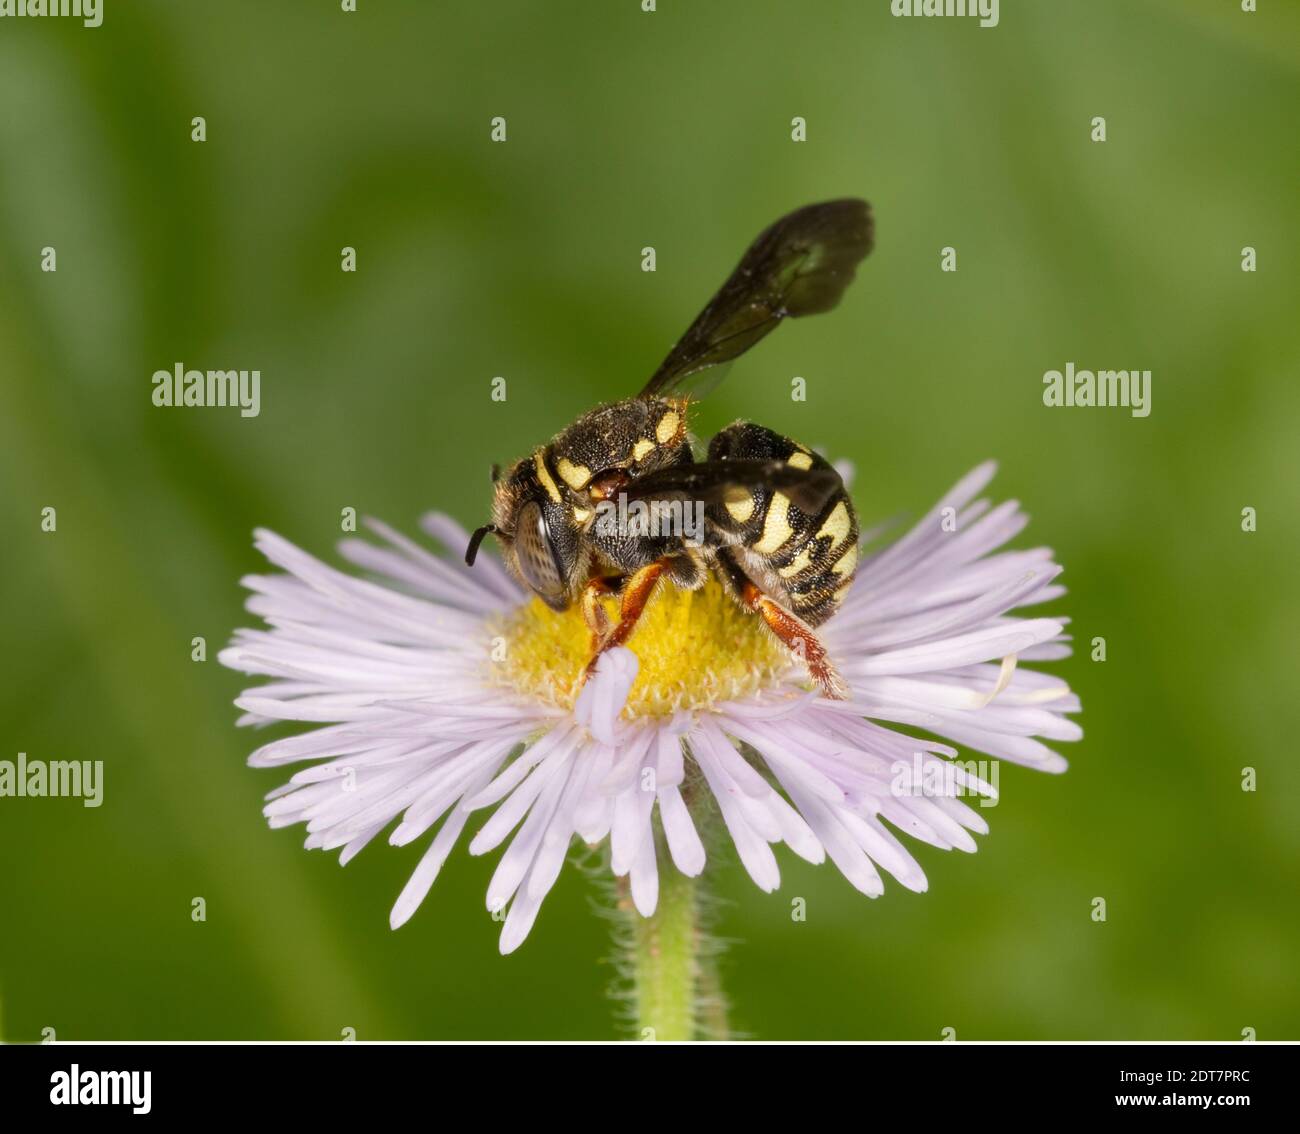 Borotondo-resina boreale femmina, Anthidiellum notatum, Megachilidae. Lunghezza corpo 7 mm. Fotografato su Erigeron sp., Asteraceae. Foto Stock